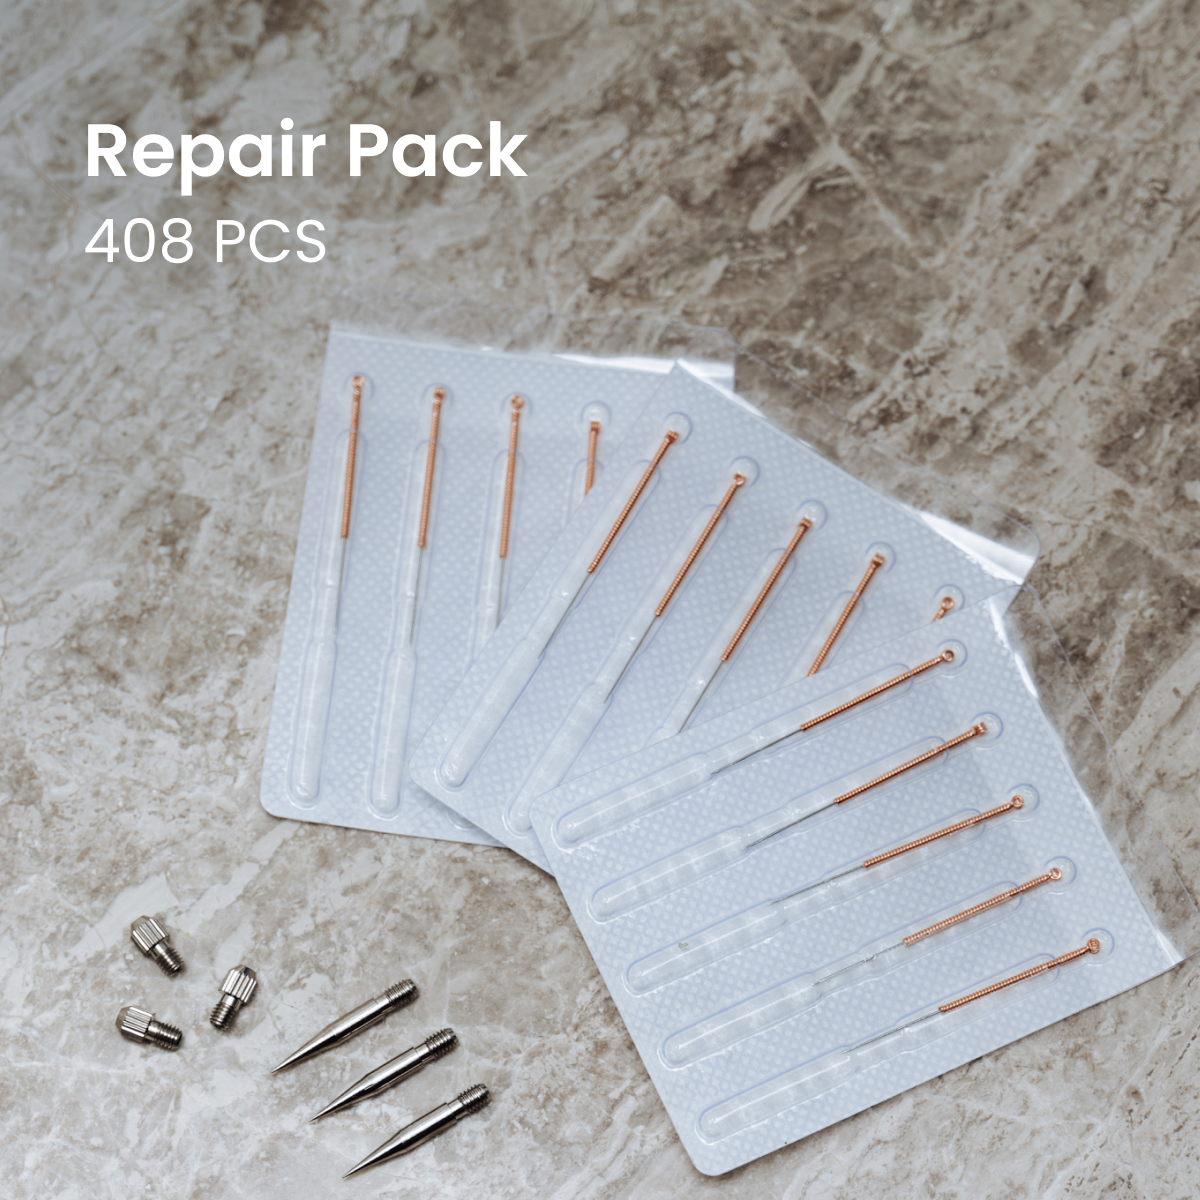 Bundle-Angebot: Beauty Spa Kit (10x) + Reparaturpaket (408 Stück) + kostenloser Ratgeber